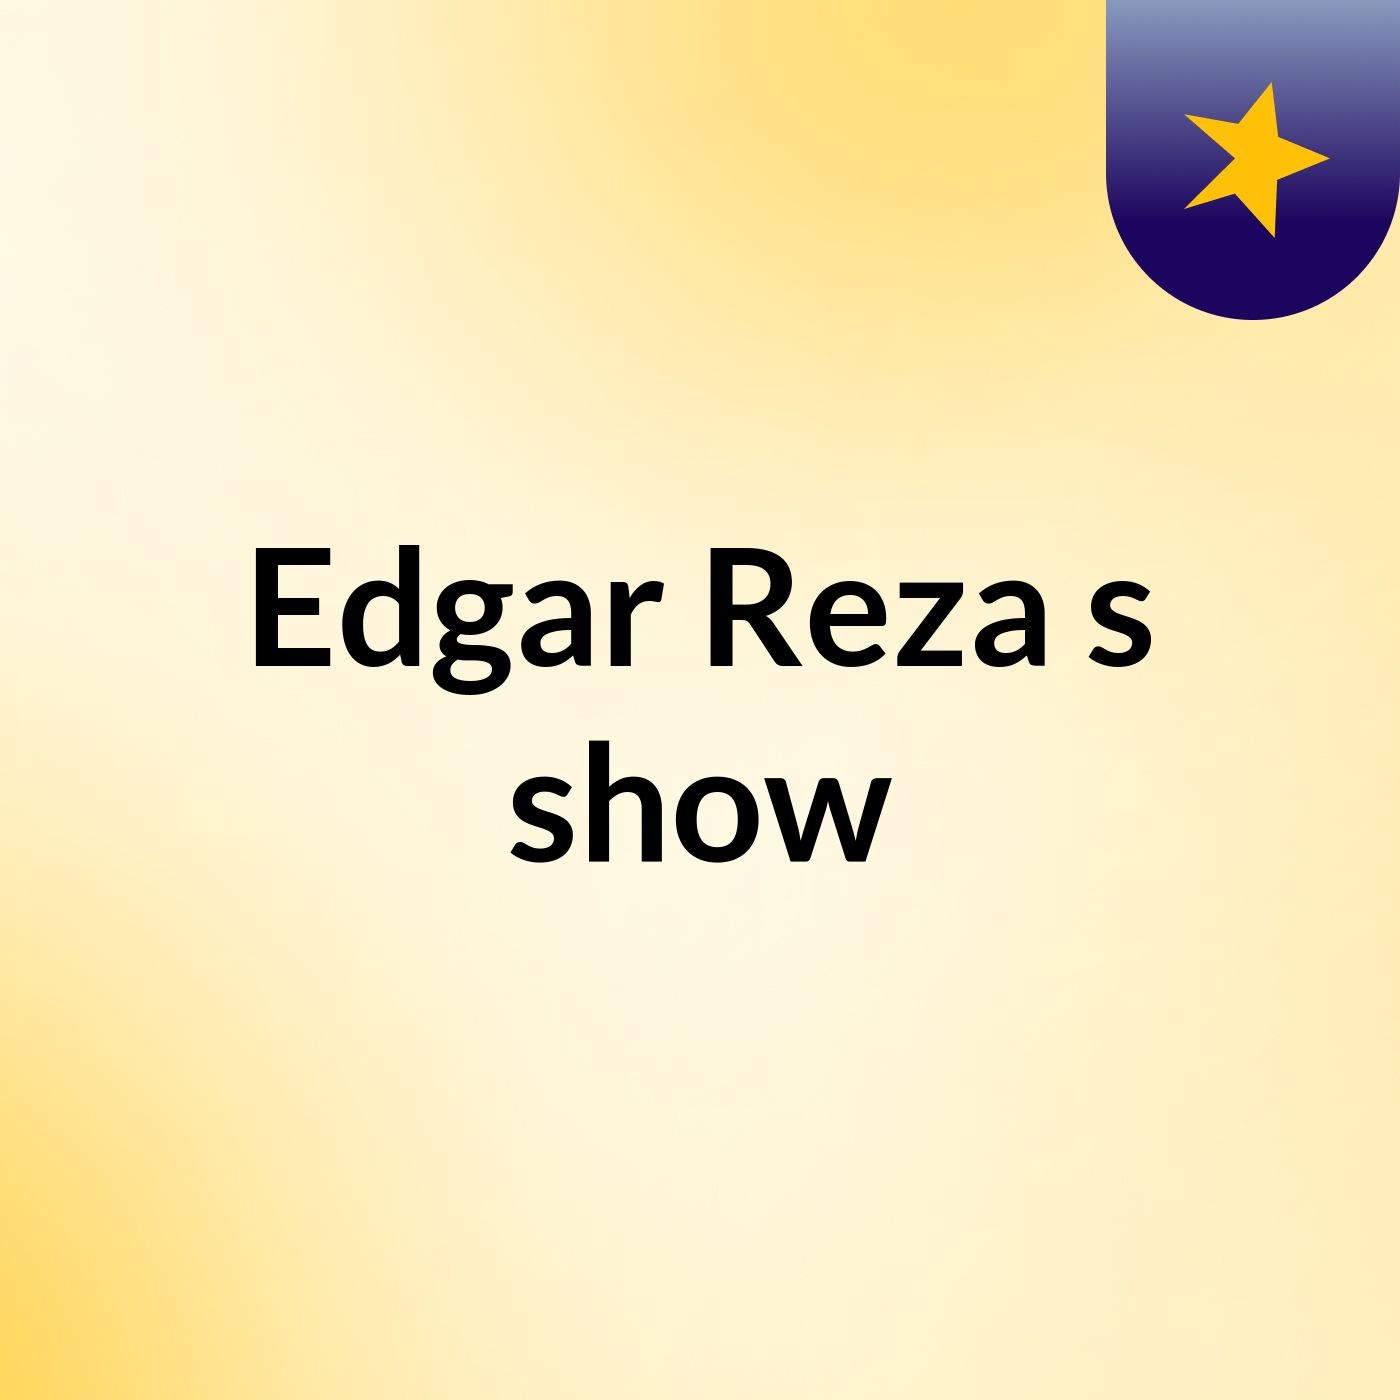 Edgar Reza's show